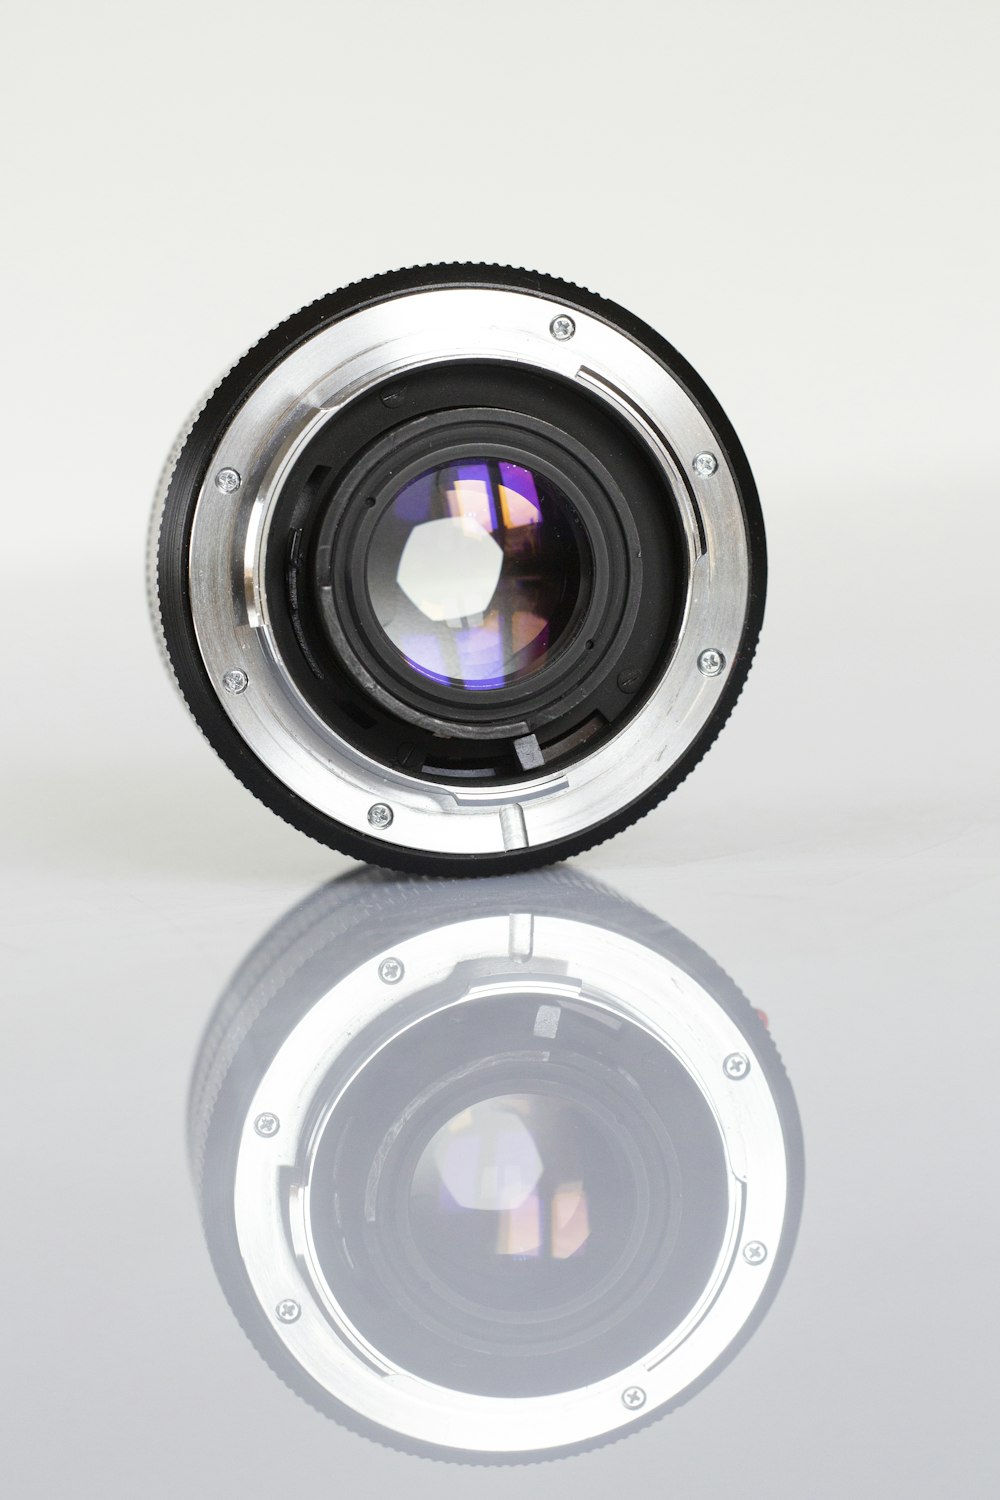 gray and black camera lens